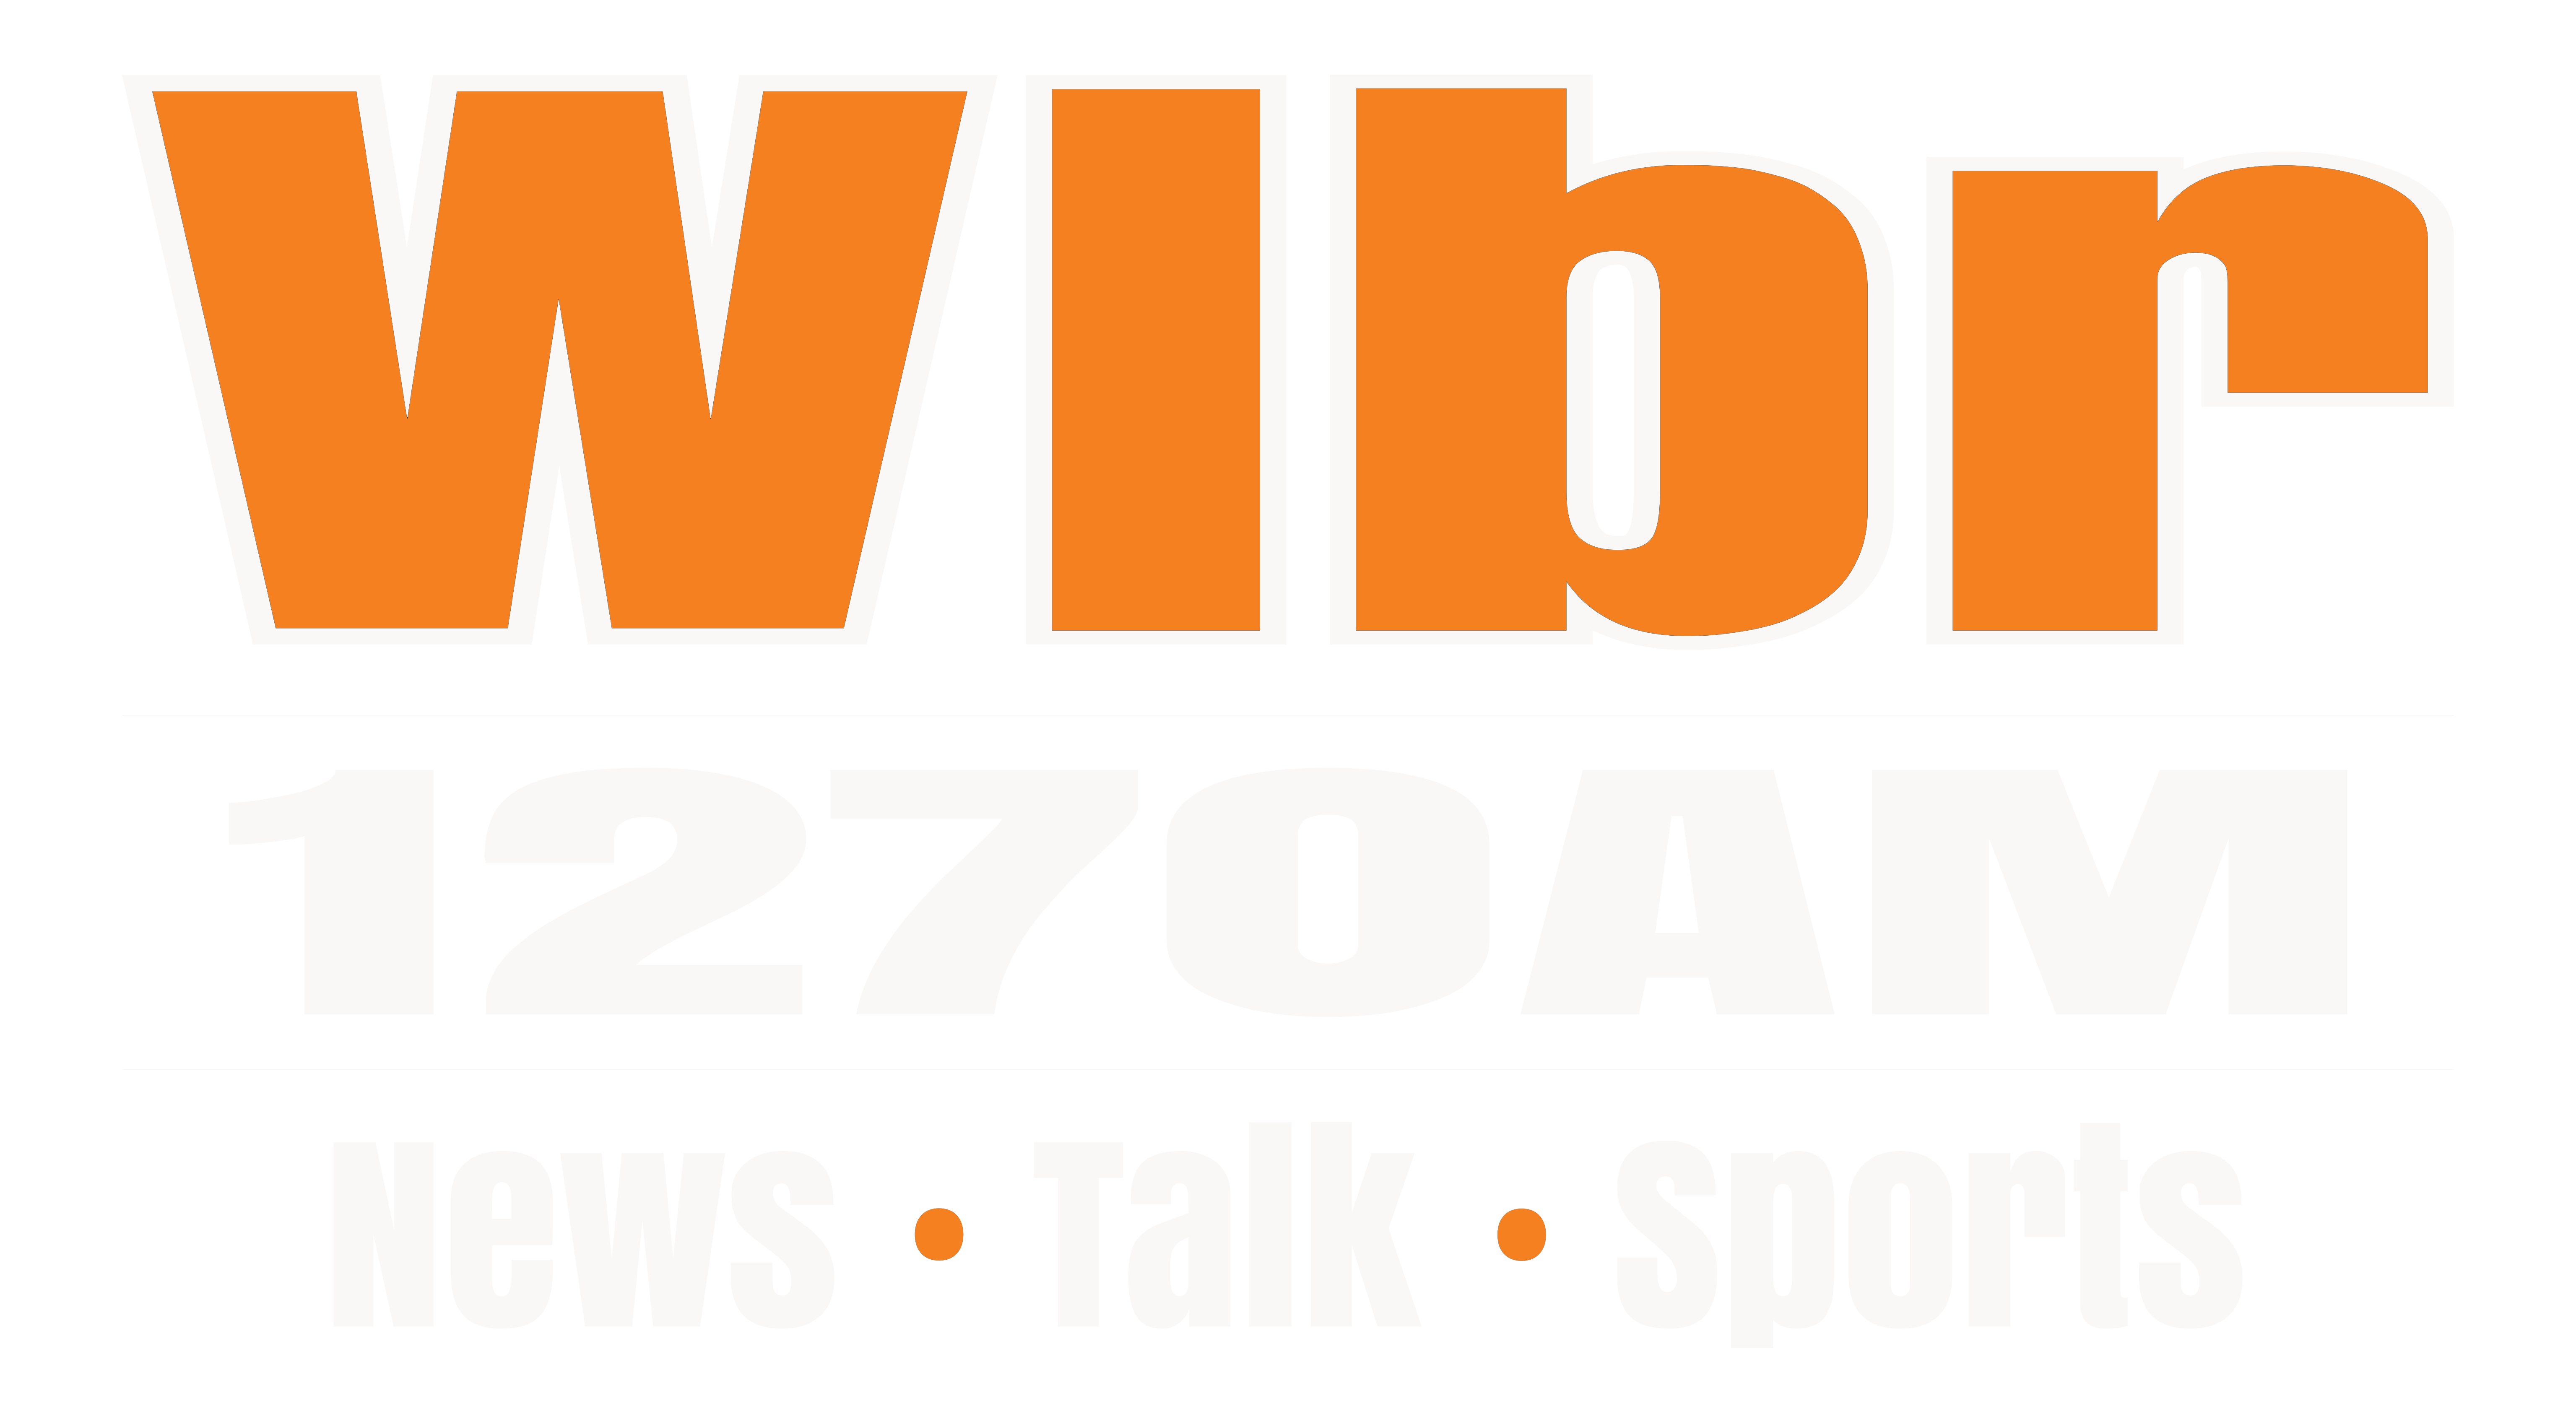 Lebanon Valley's News Talk Sports Station